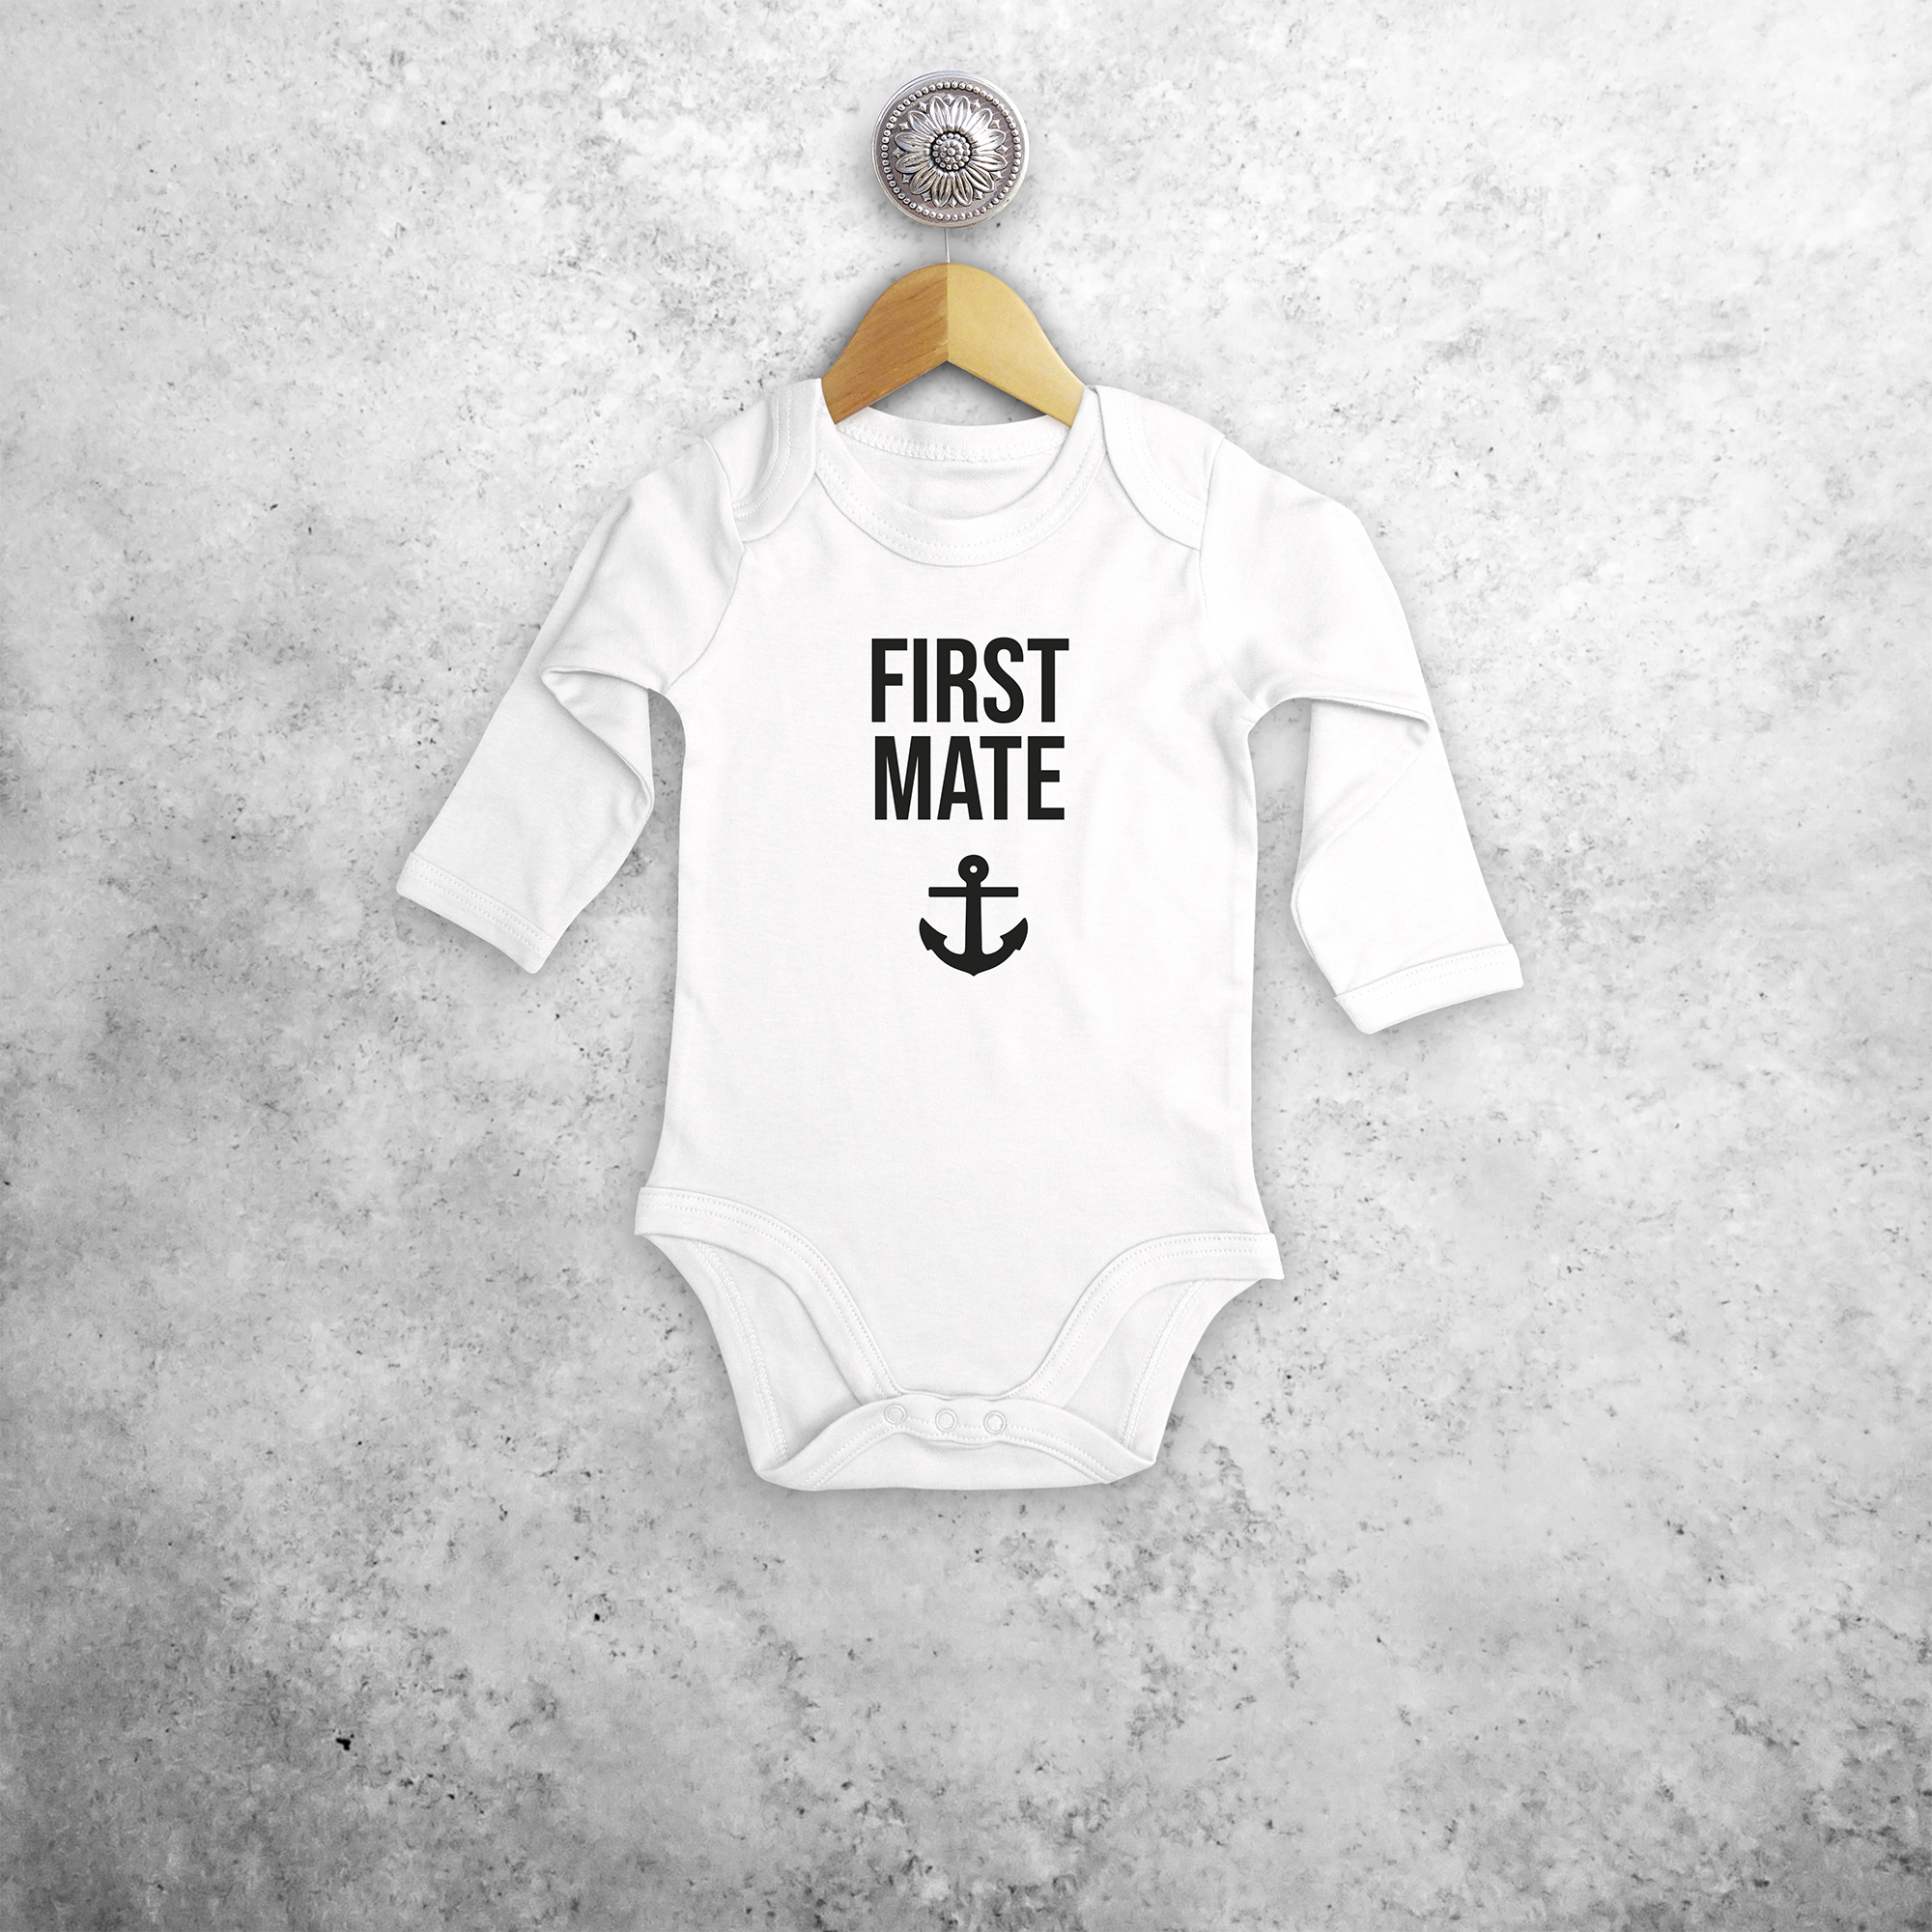 'First mate' baby longsleeve bodysuit